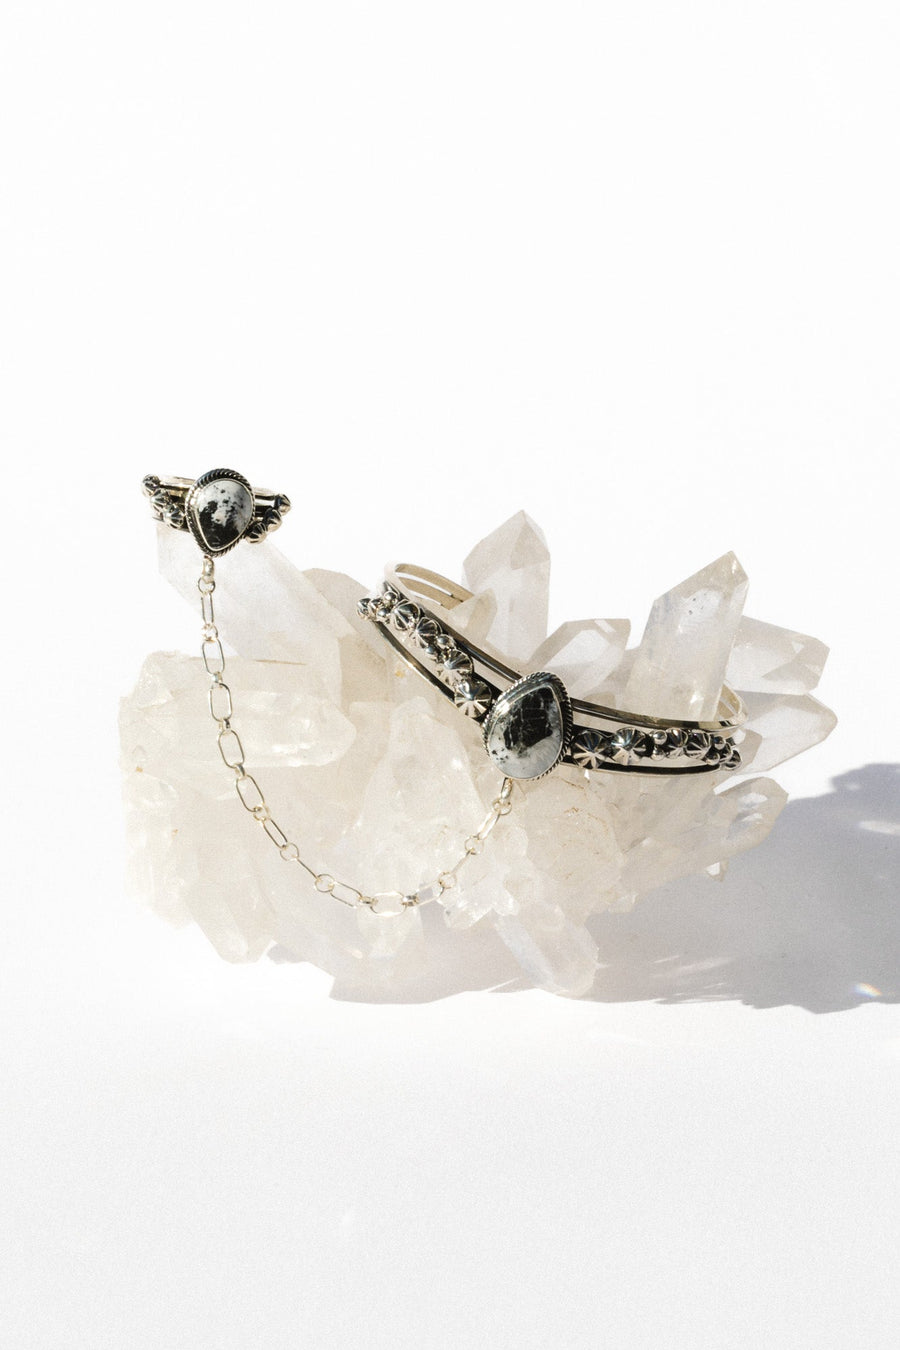 Sunwest Jewelry Silver / US 7 / White Buffalo Turquoise White Buffalo Cuff and Ring Hand Chain